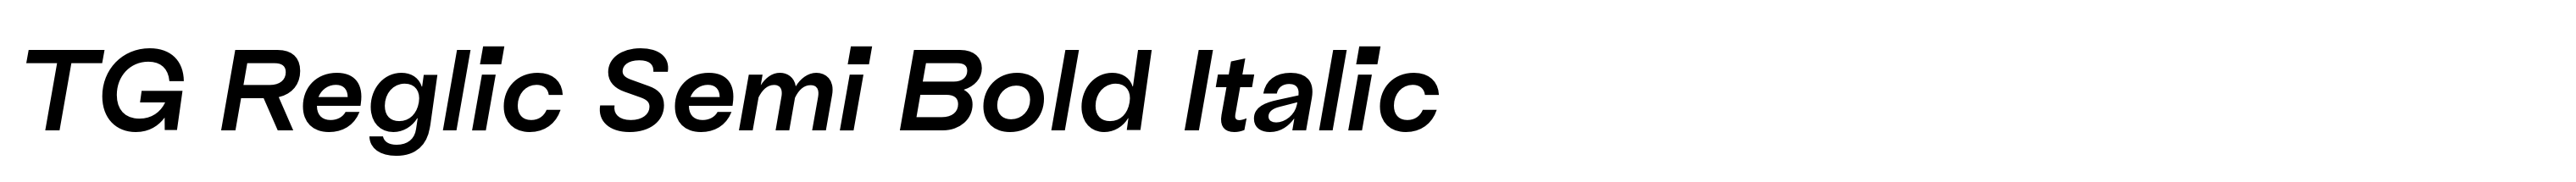 TG Reglic Semi Bold Italic